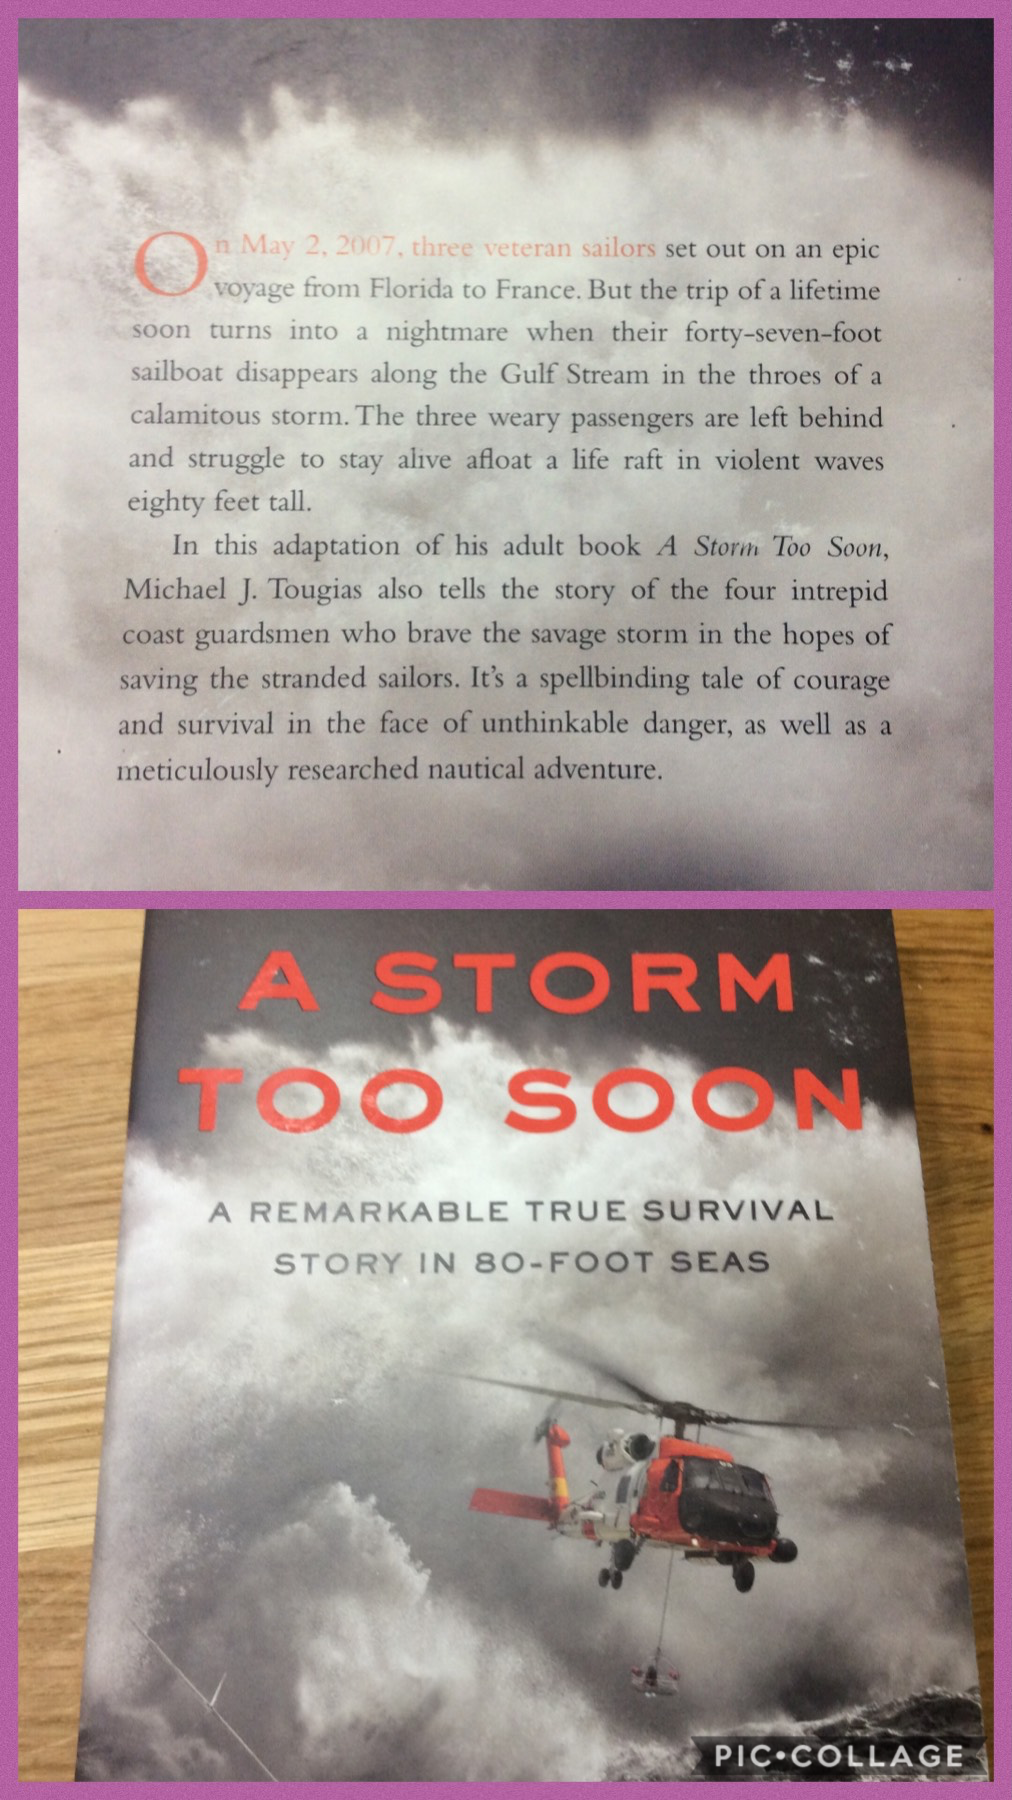 “A Storm Too Soon” by Michael J Tougias